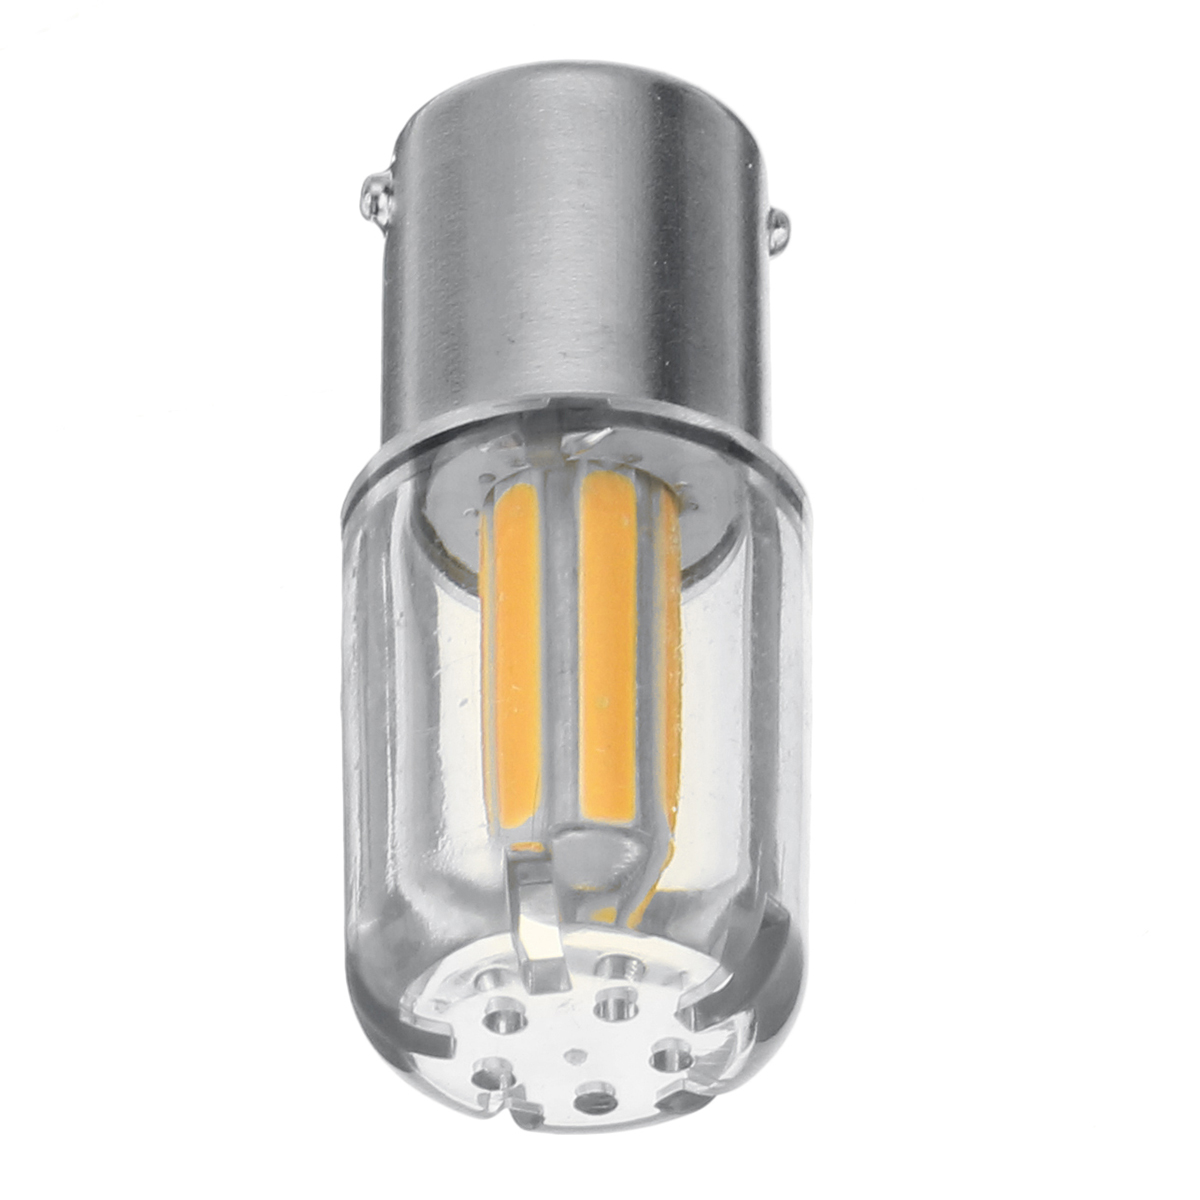 1156 BA15S P21W COB LED Light Bulb 5W 12-24V 360° Lighting Stop Brake Parking Turn Signal Lamp for Car Trunk Van - Auto GoShop